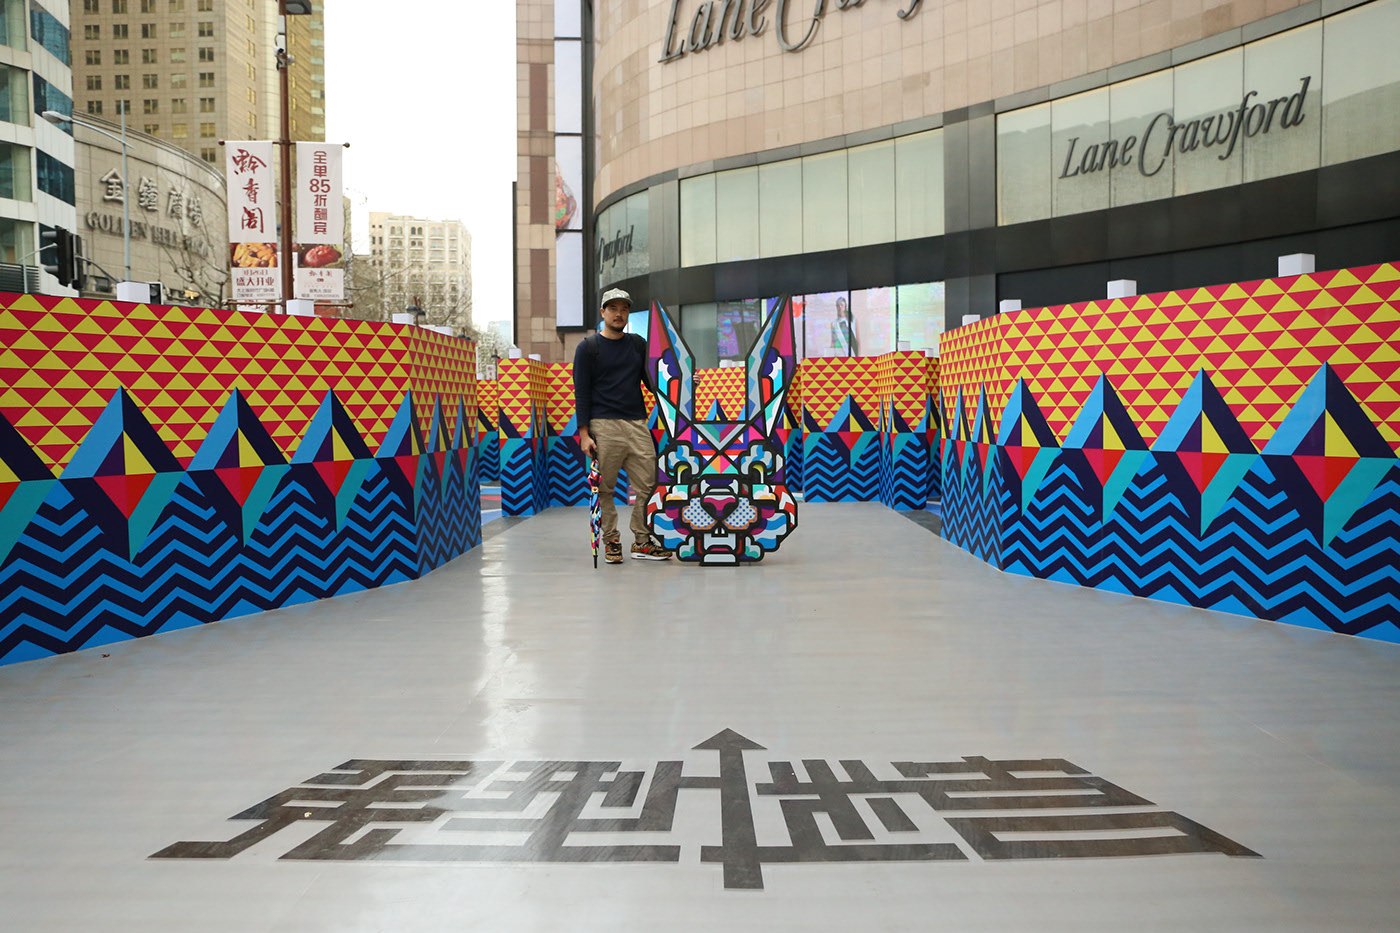 Rukkit  Shanghai Times Square  CG+ Maze Bunny Head for Shanghai Times Square 2018